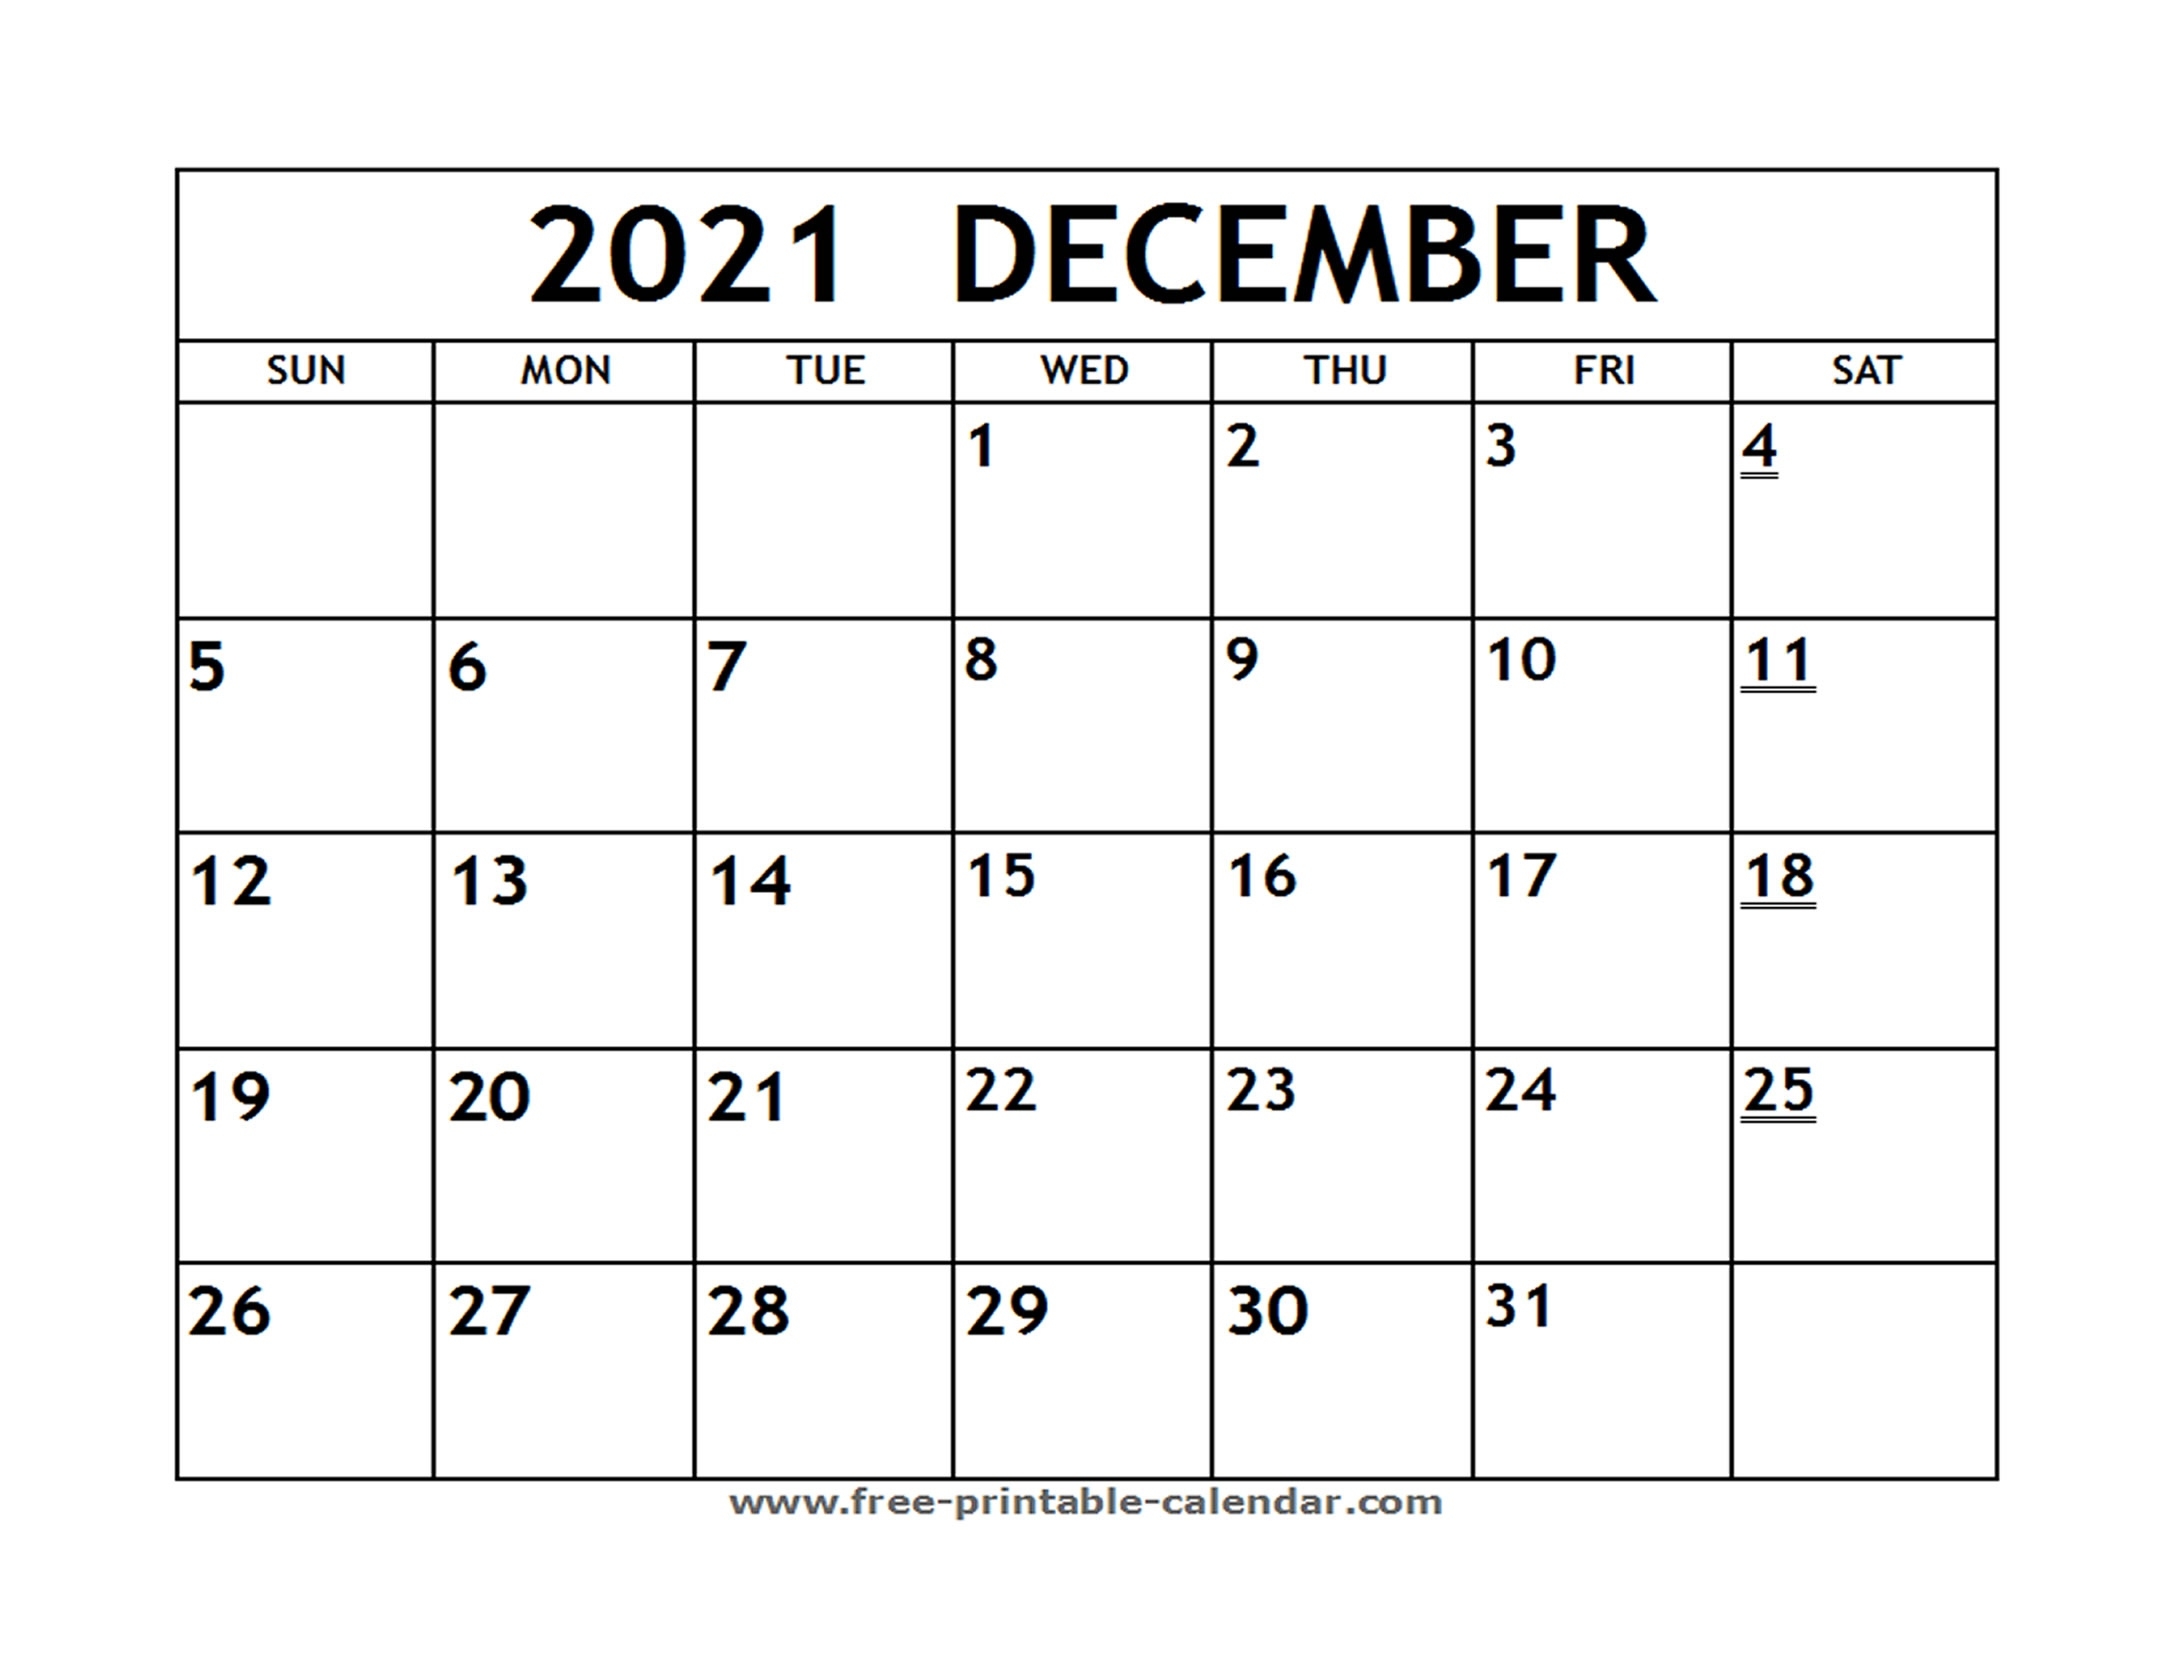 Printable 2021 December Calendar - Free-Printable-Calendar December 2021 Editable Calendar